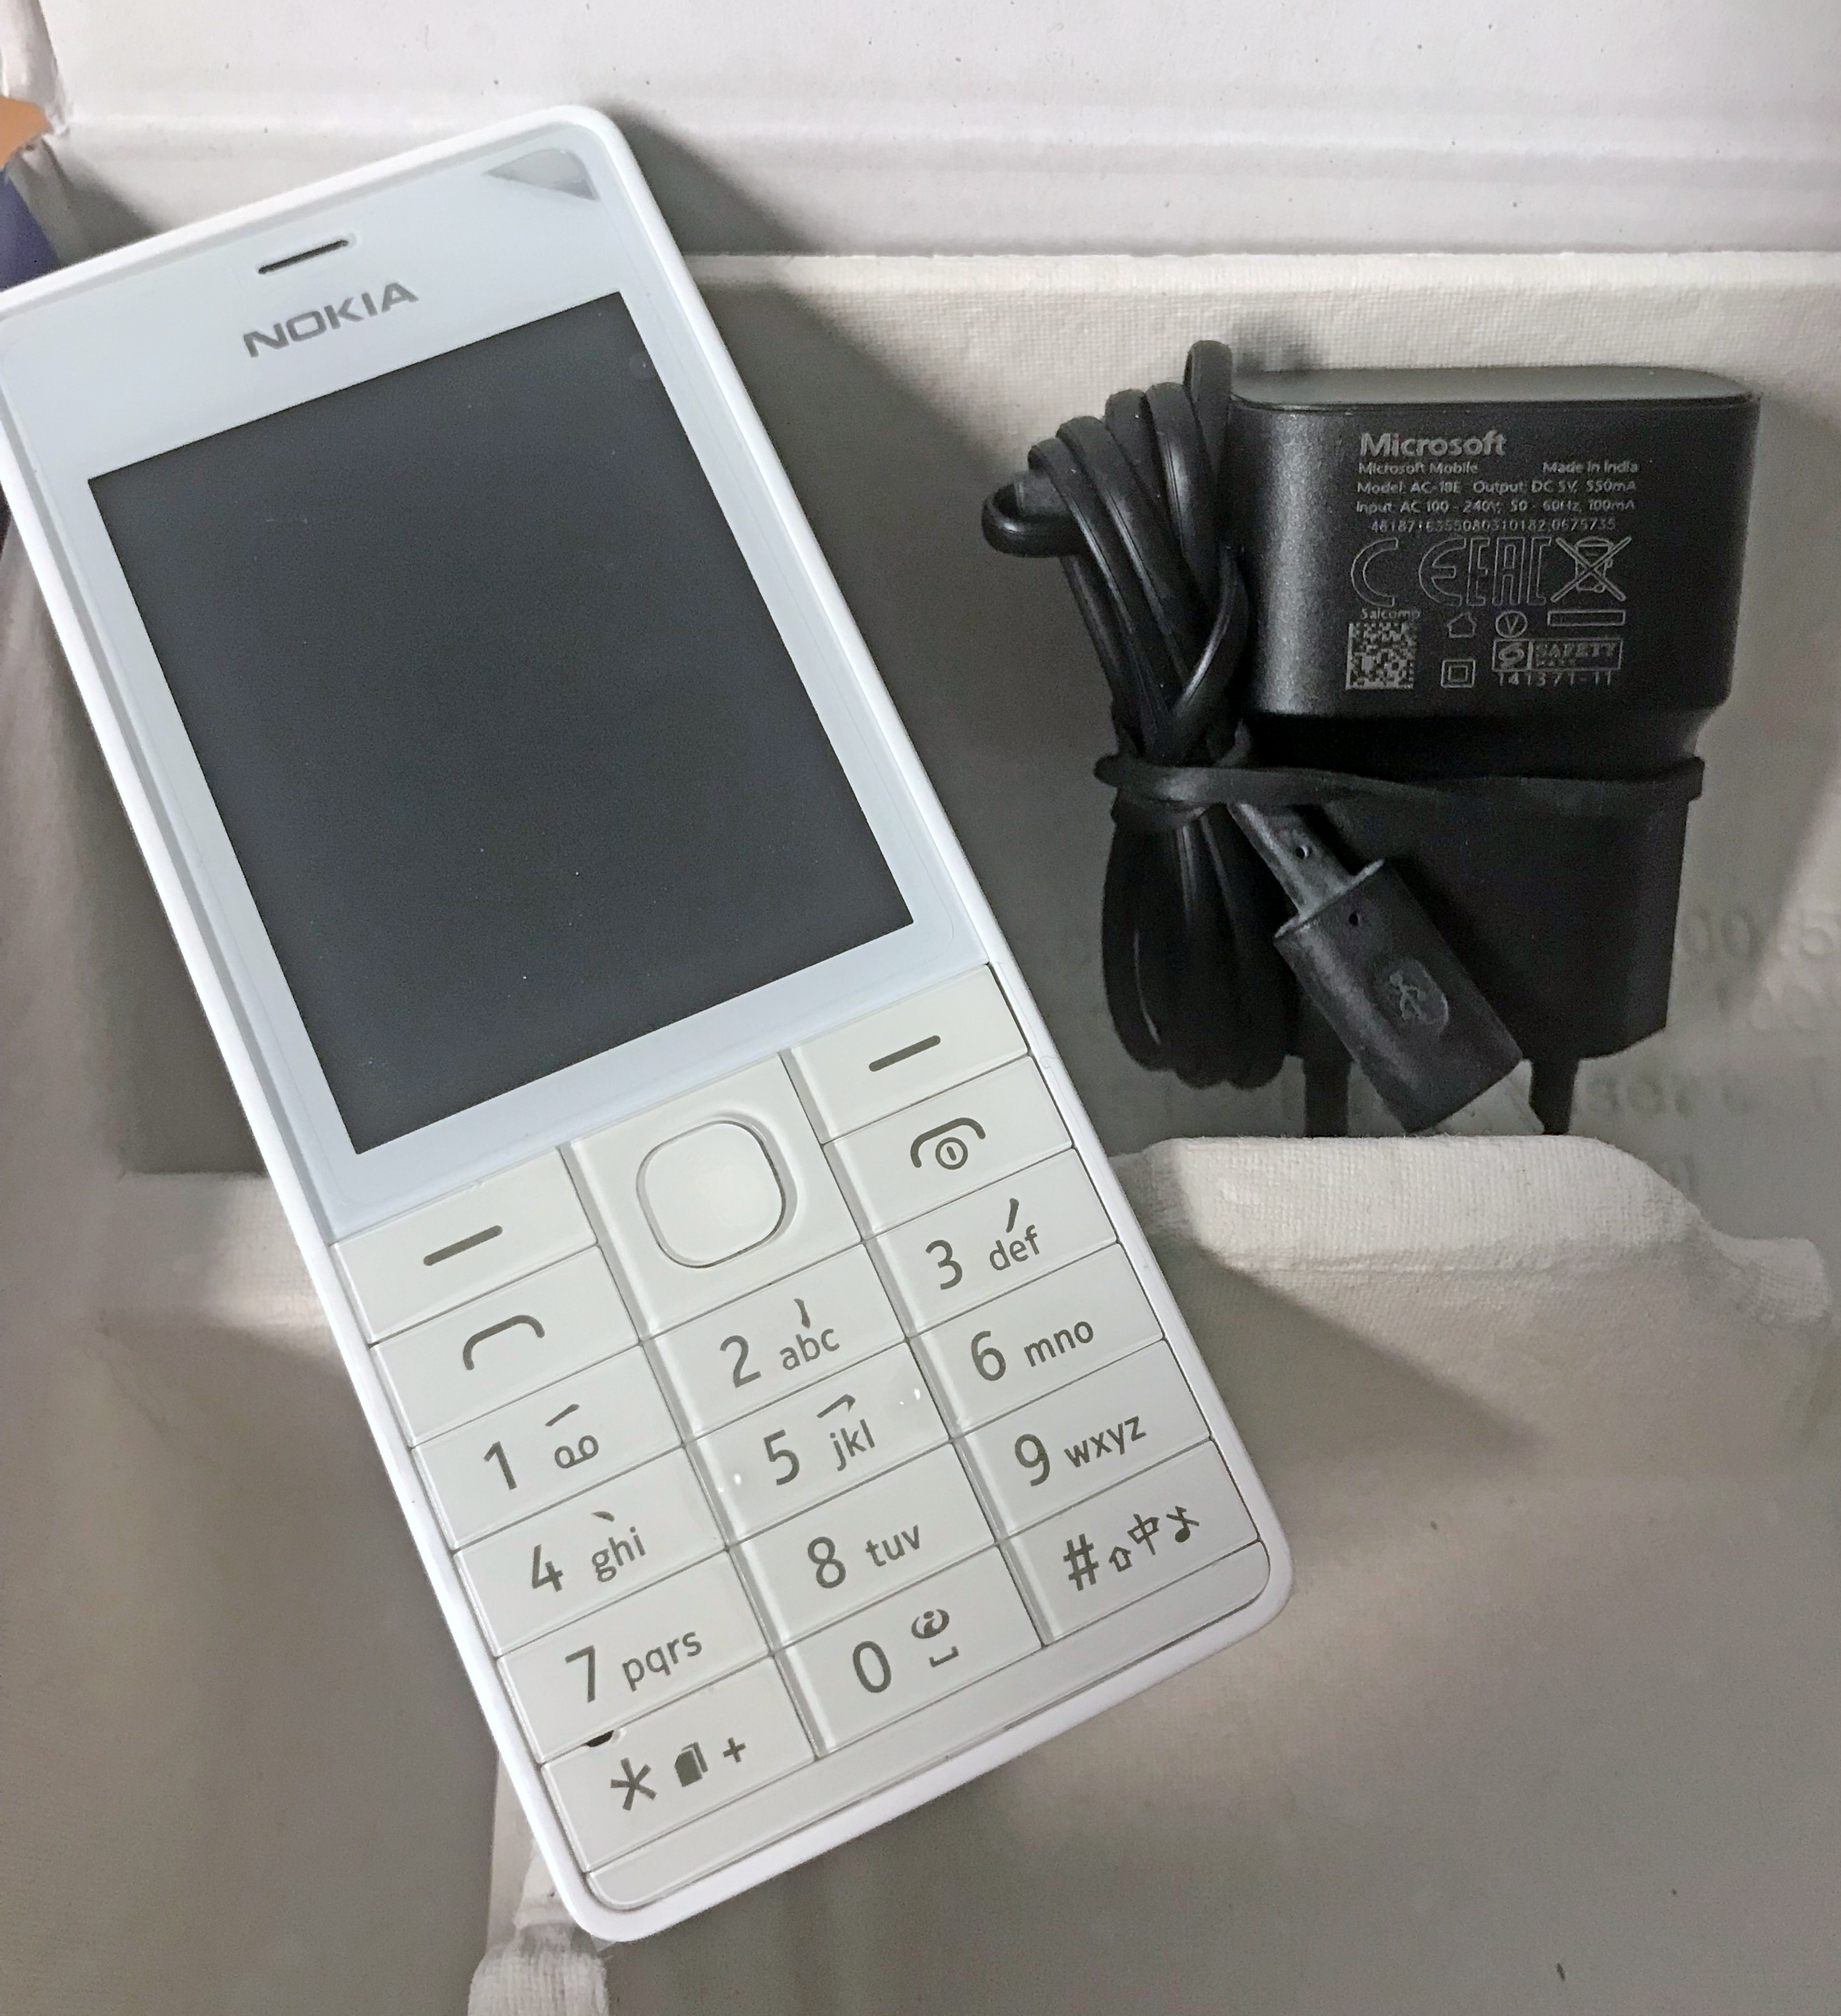 Nokia 515 Tasten-Handy Mobile Phone Quad-Band UMTS GPRS Bluetooth Kamera MP3 wie Neu